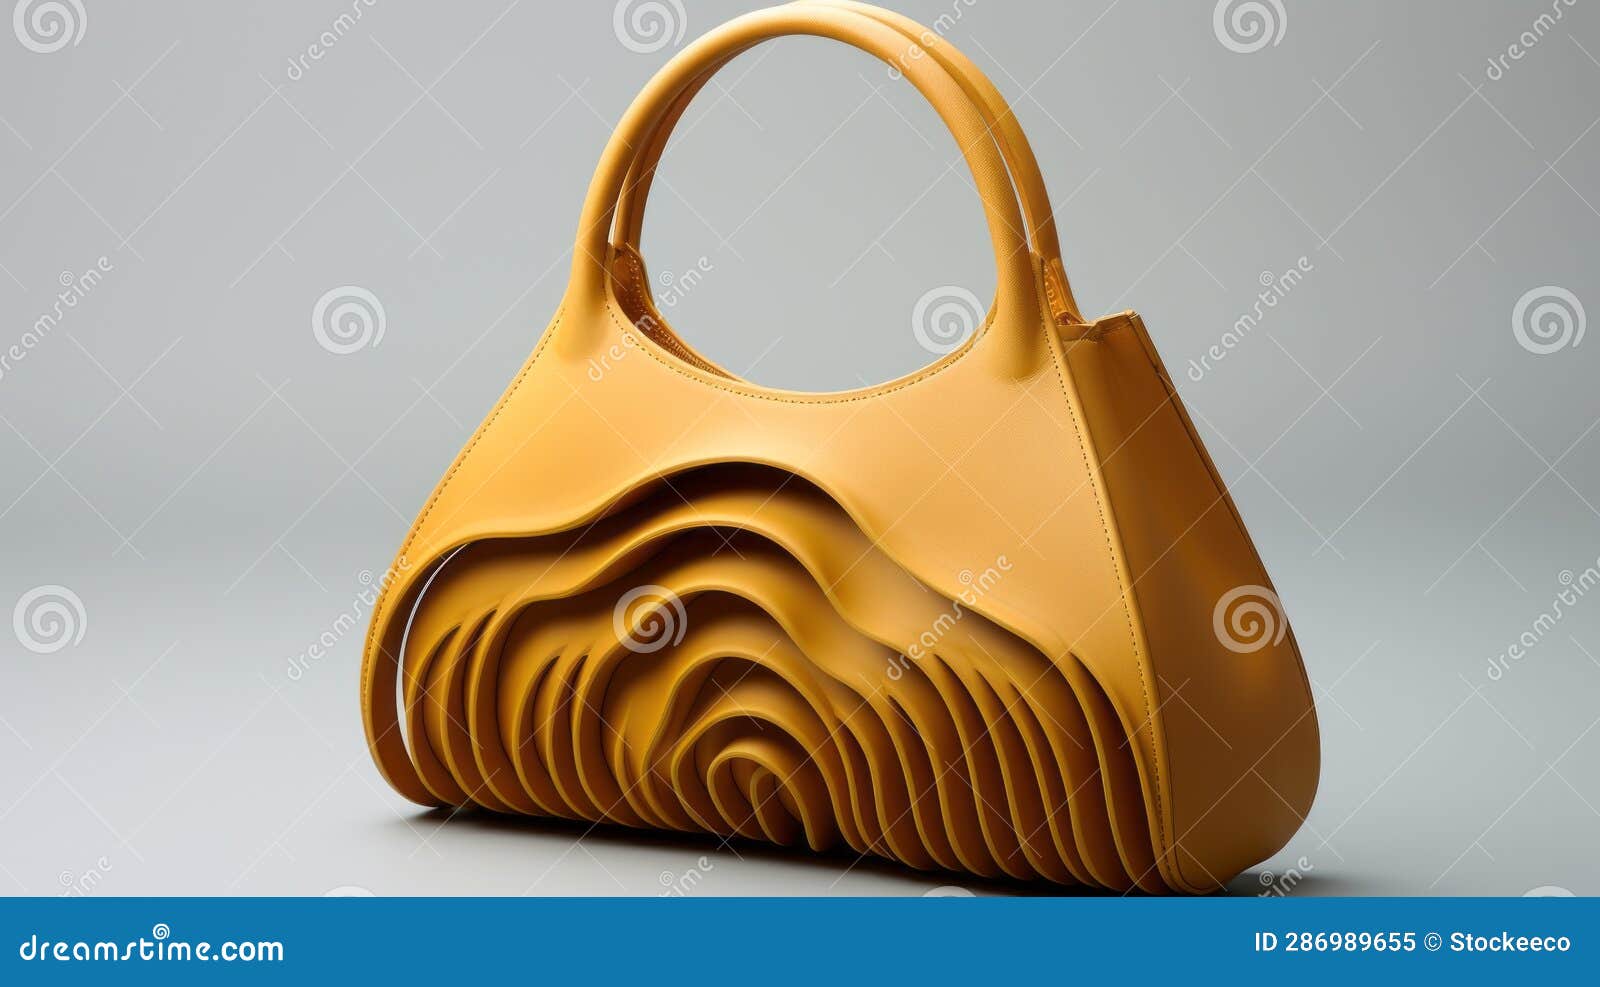 a futuristic handbag with a moth inspired design, 3D printed on Craiyon